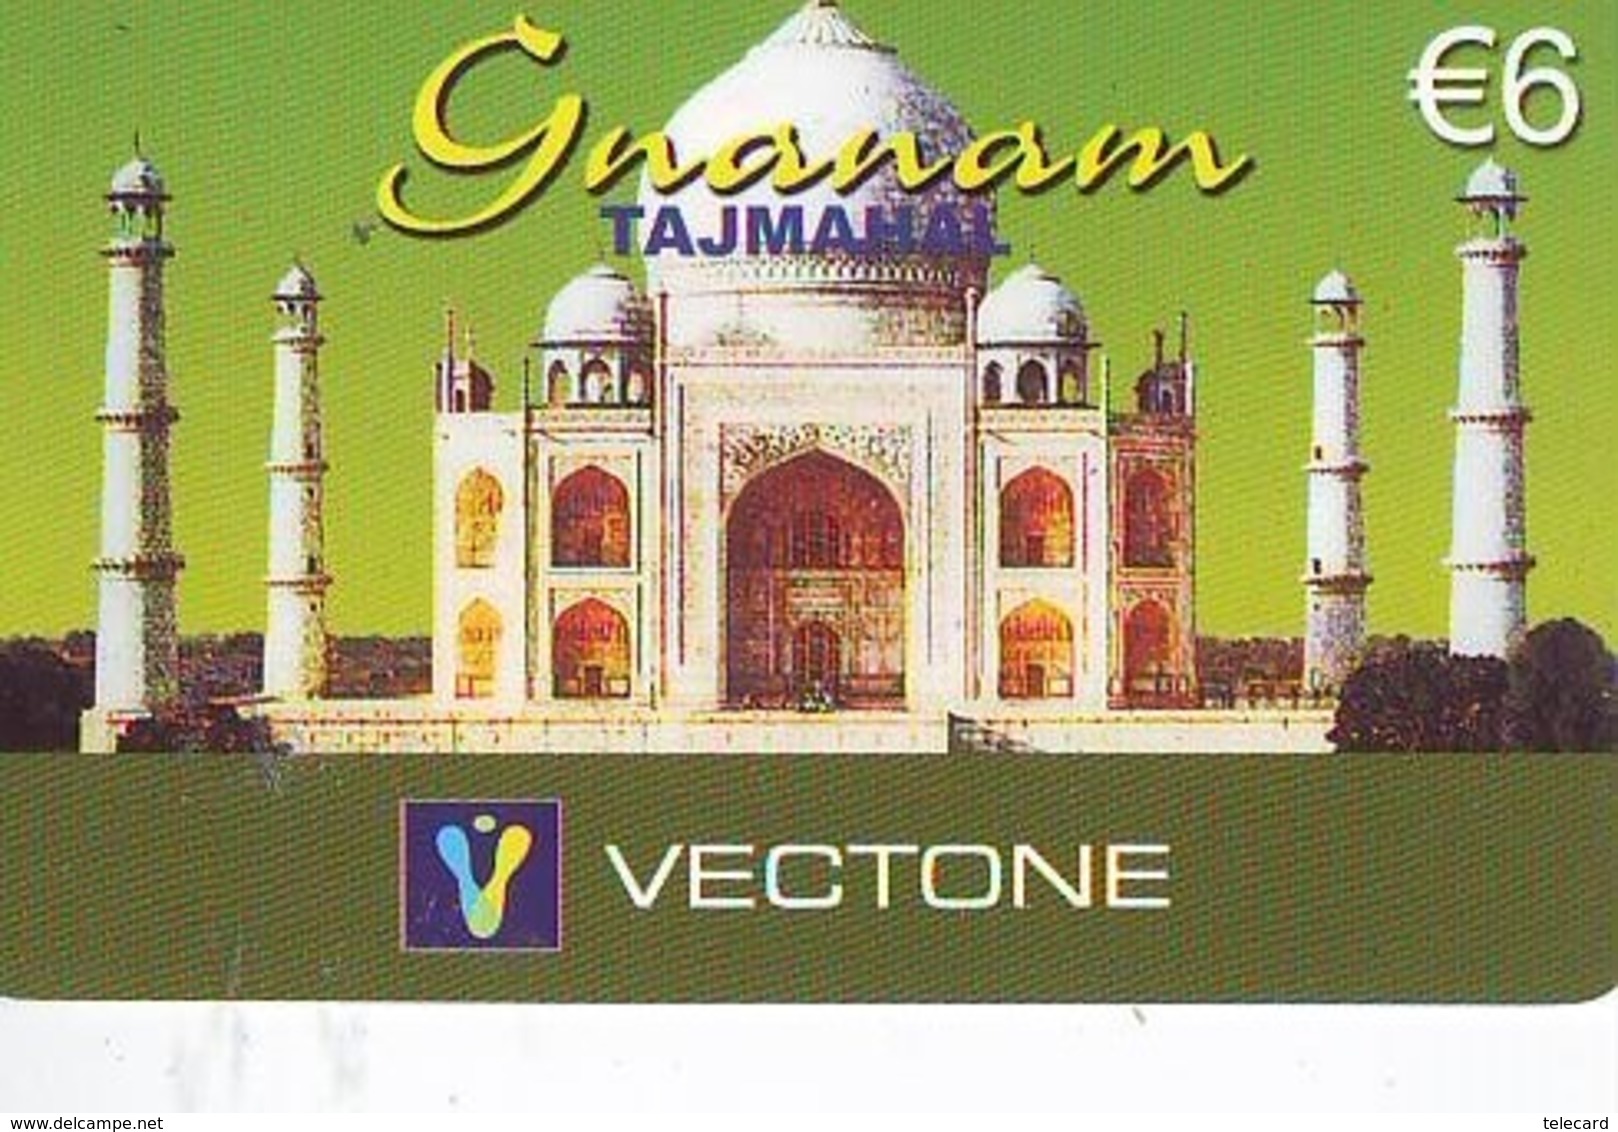 Télécarte India Related (79) Taj Mahal - Paysages